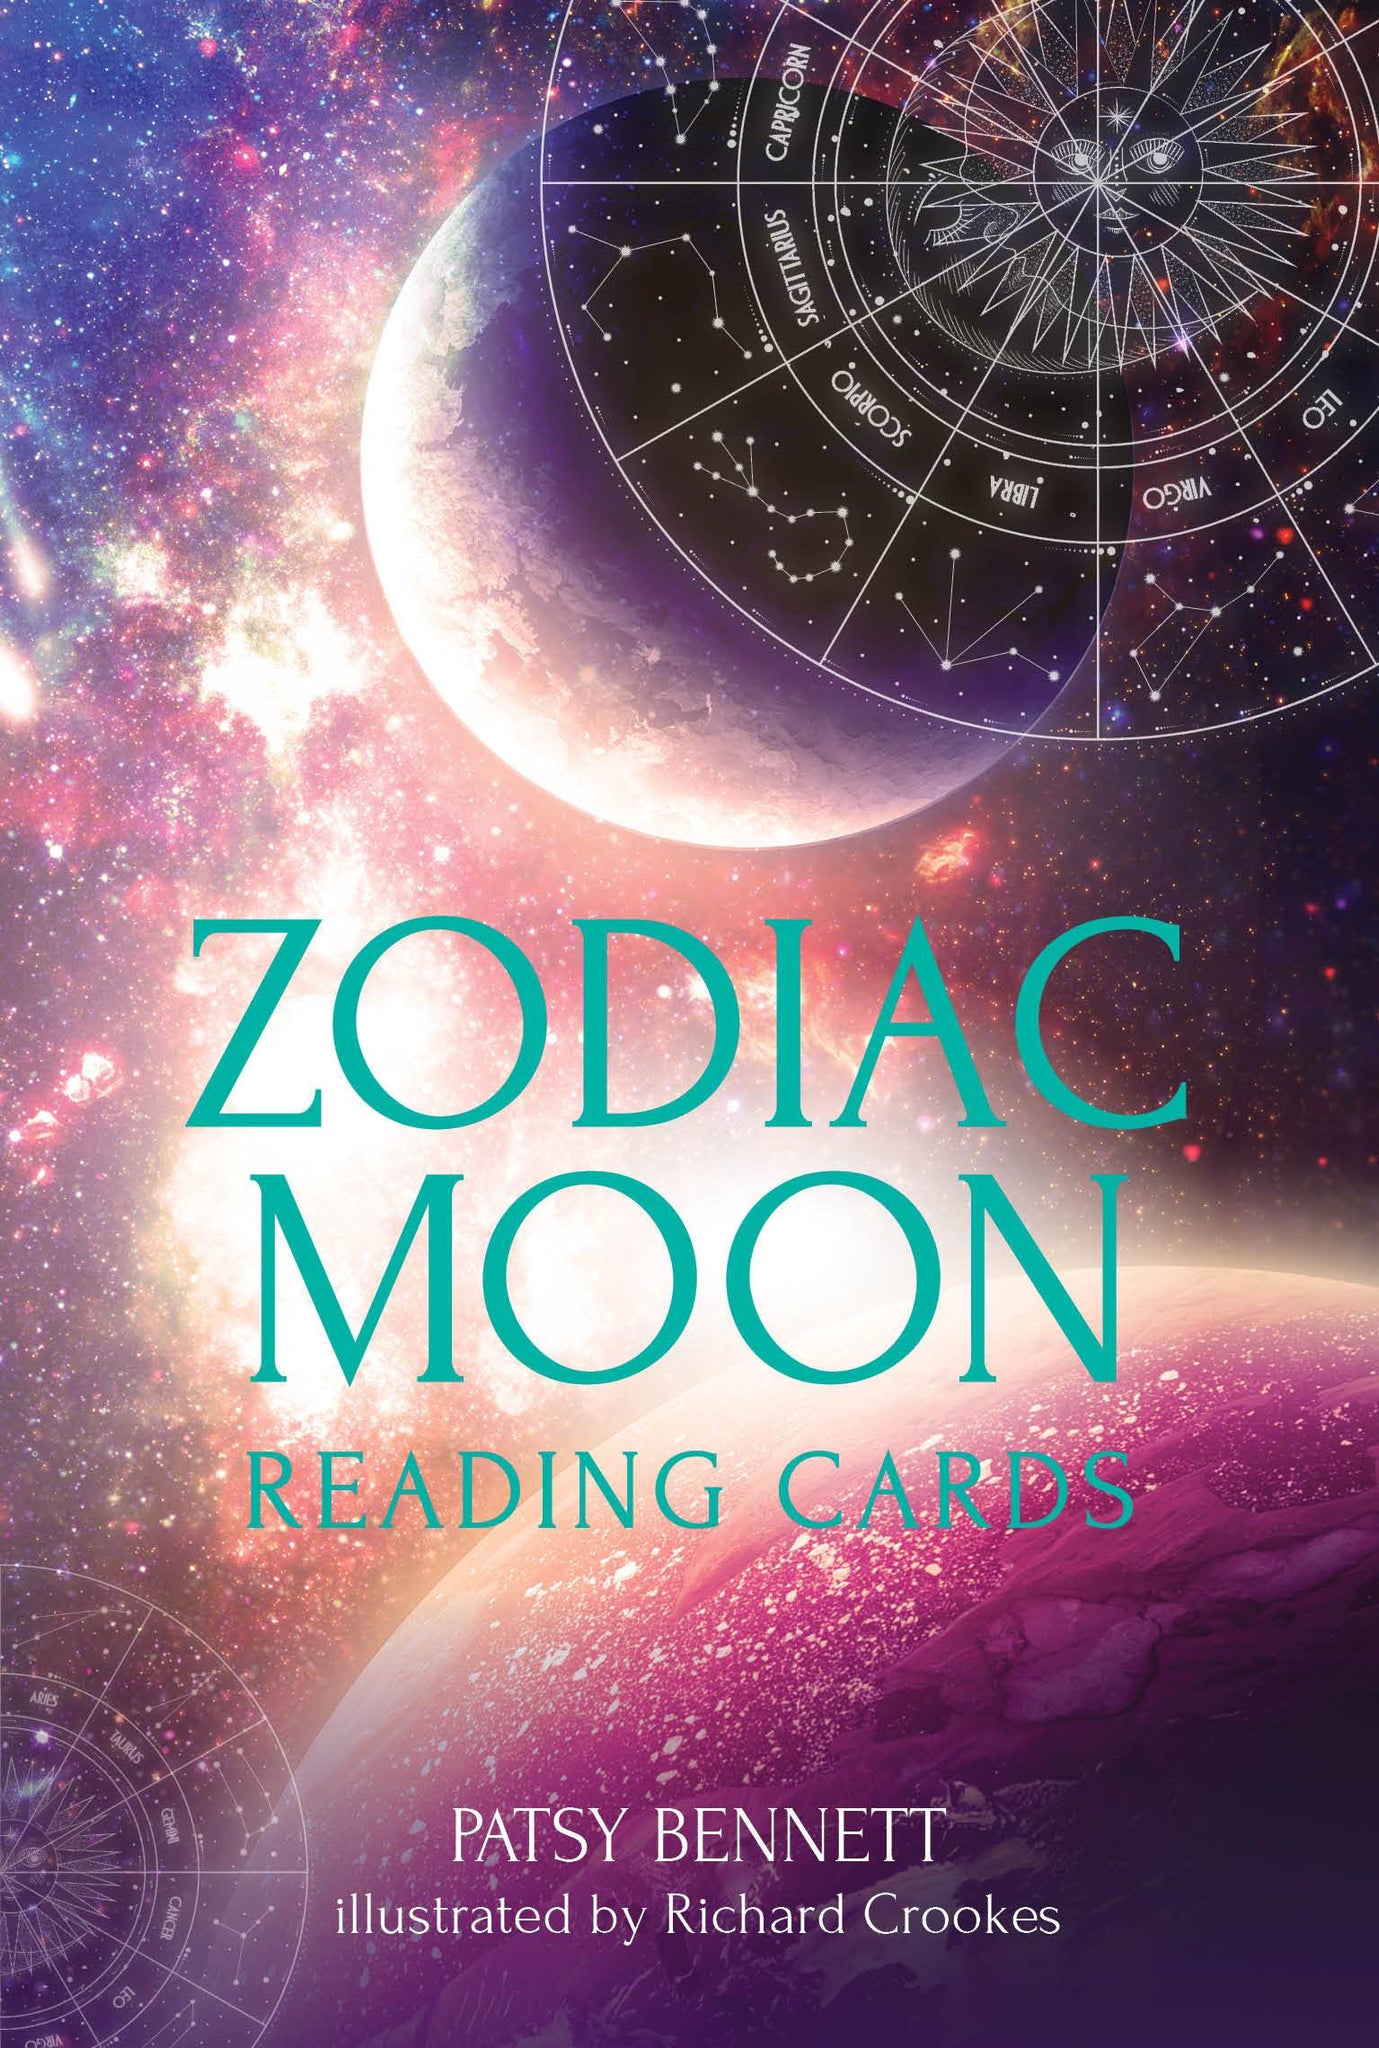 Zodiac Moon Reading Cards by Patsy Bennett, Illustrator Richard Crookes